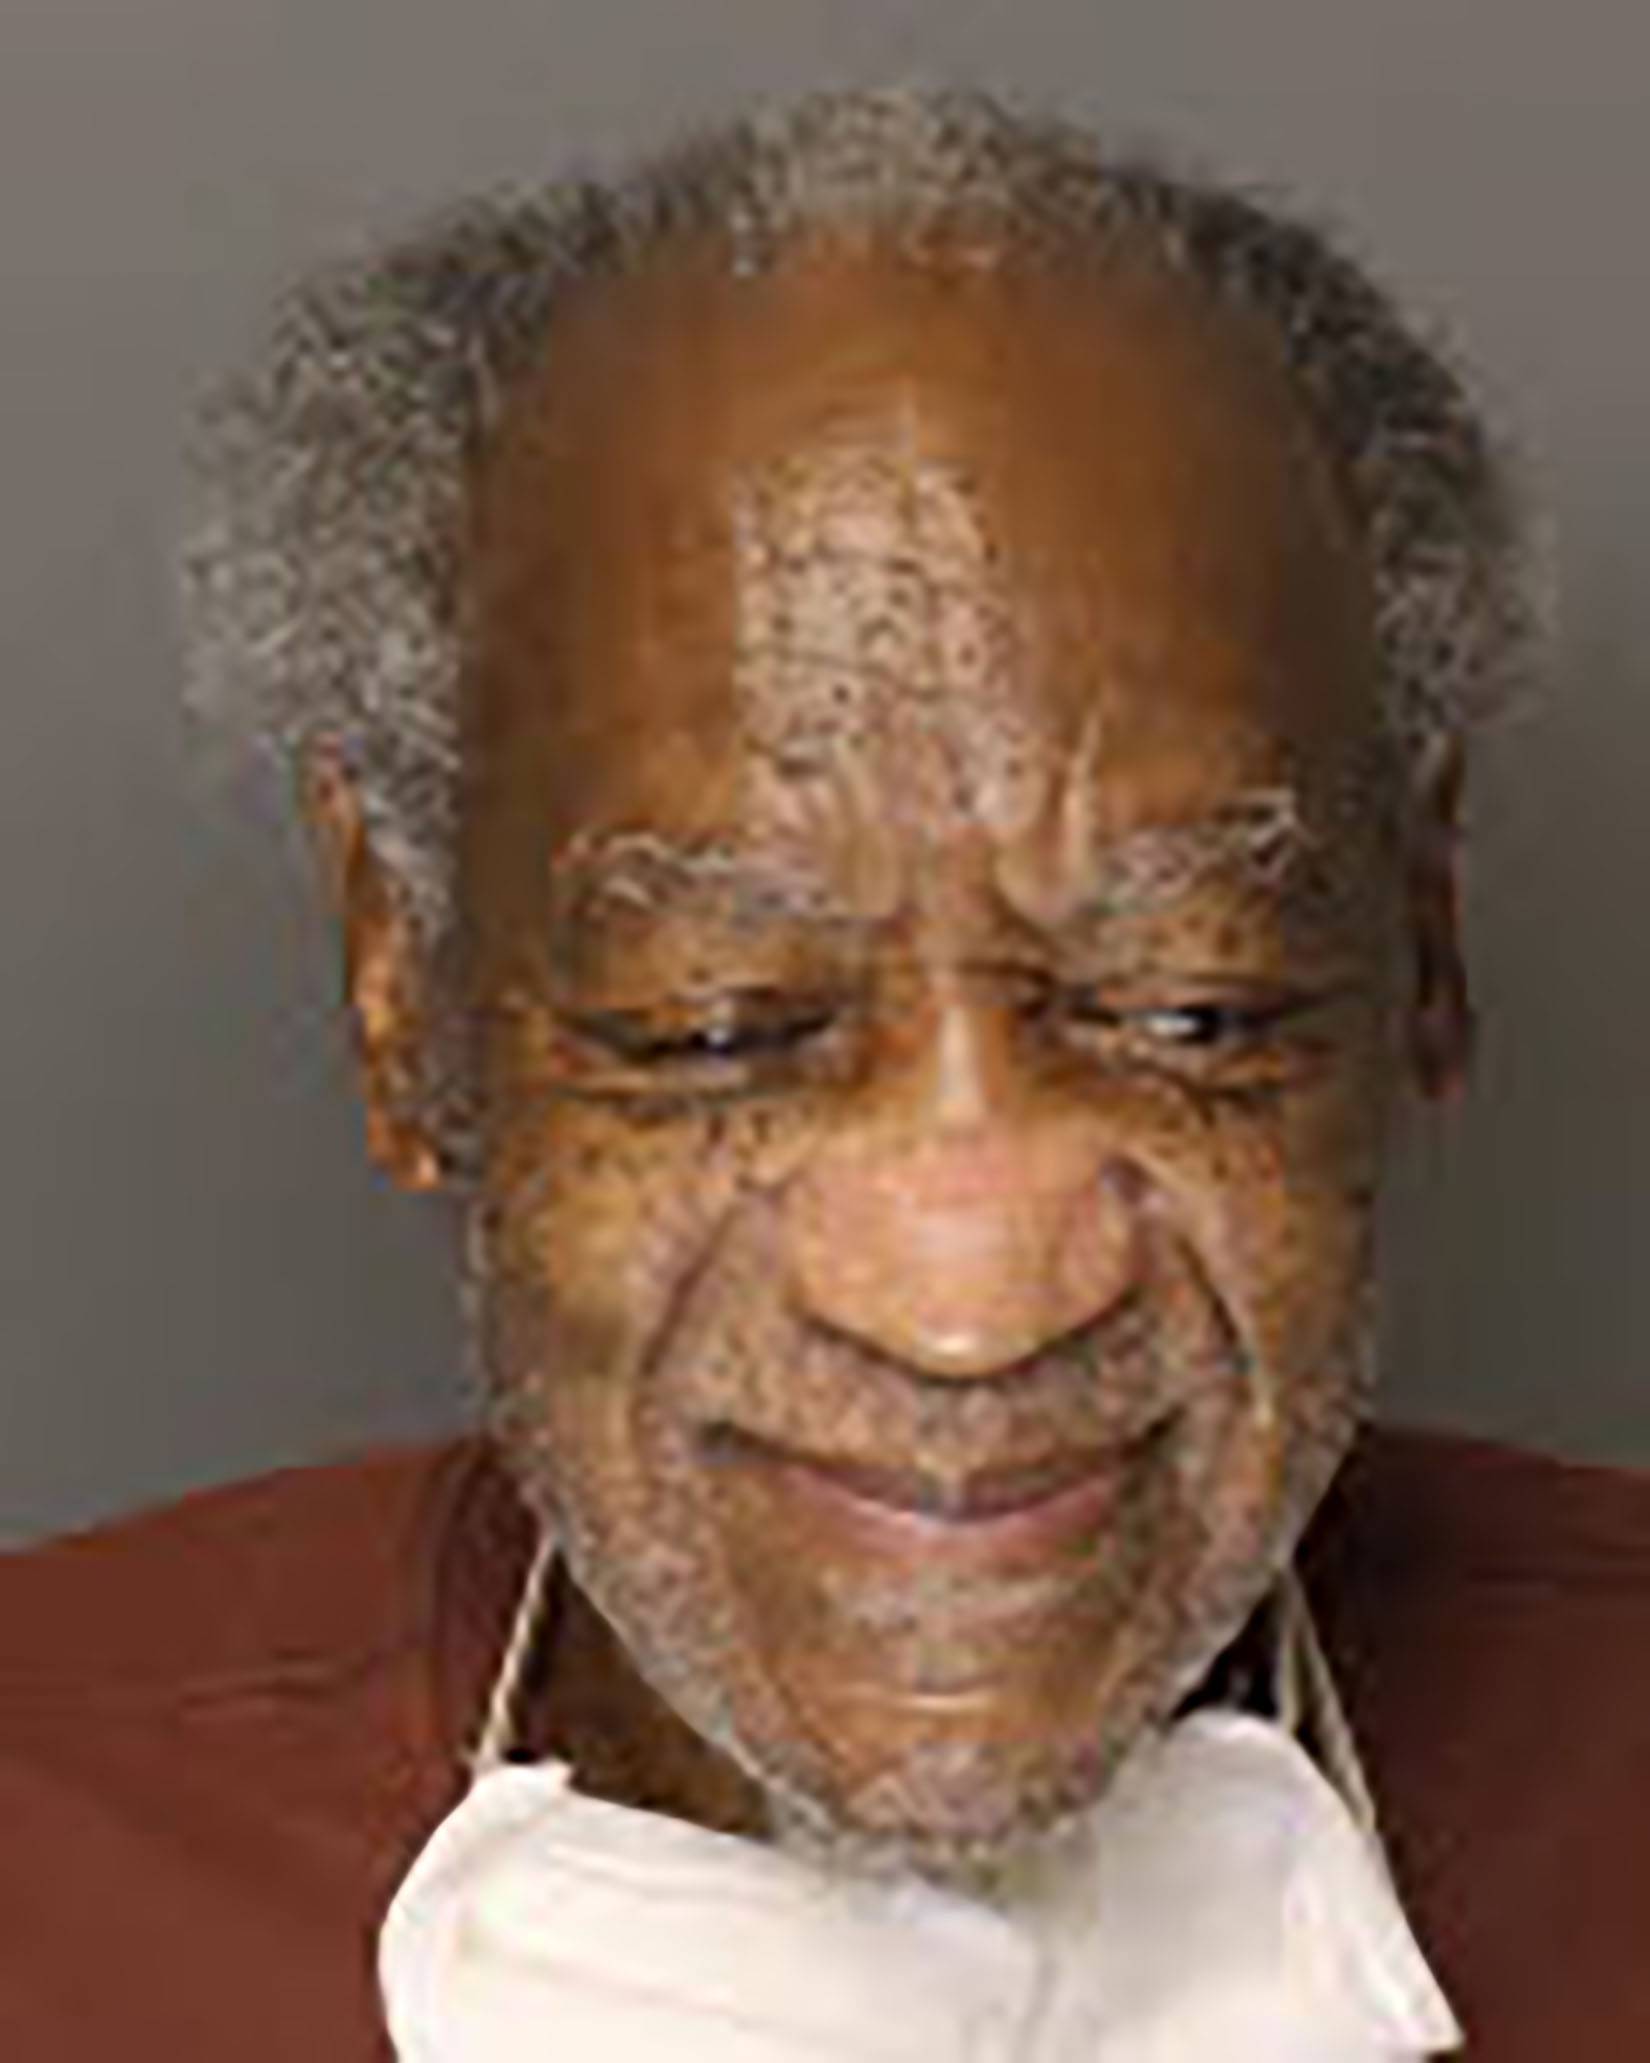 Bill Cosby grins in fresh mugshot taken at SCI Phoenix state prison, Pennsylvania.